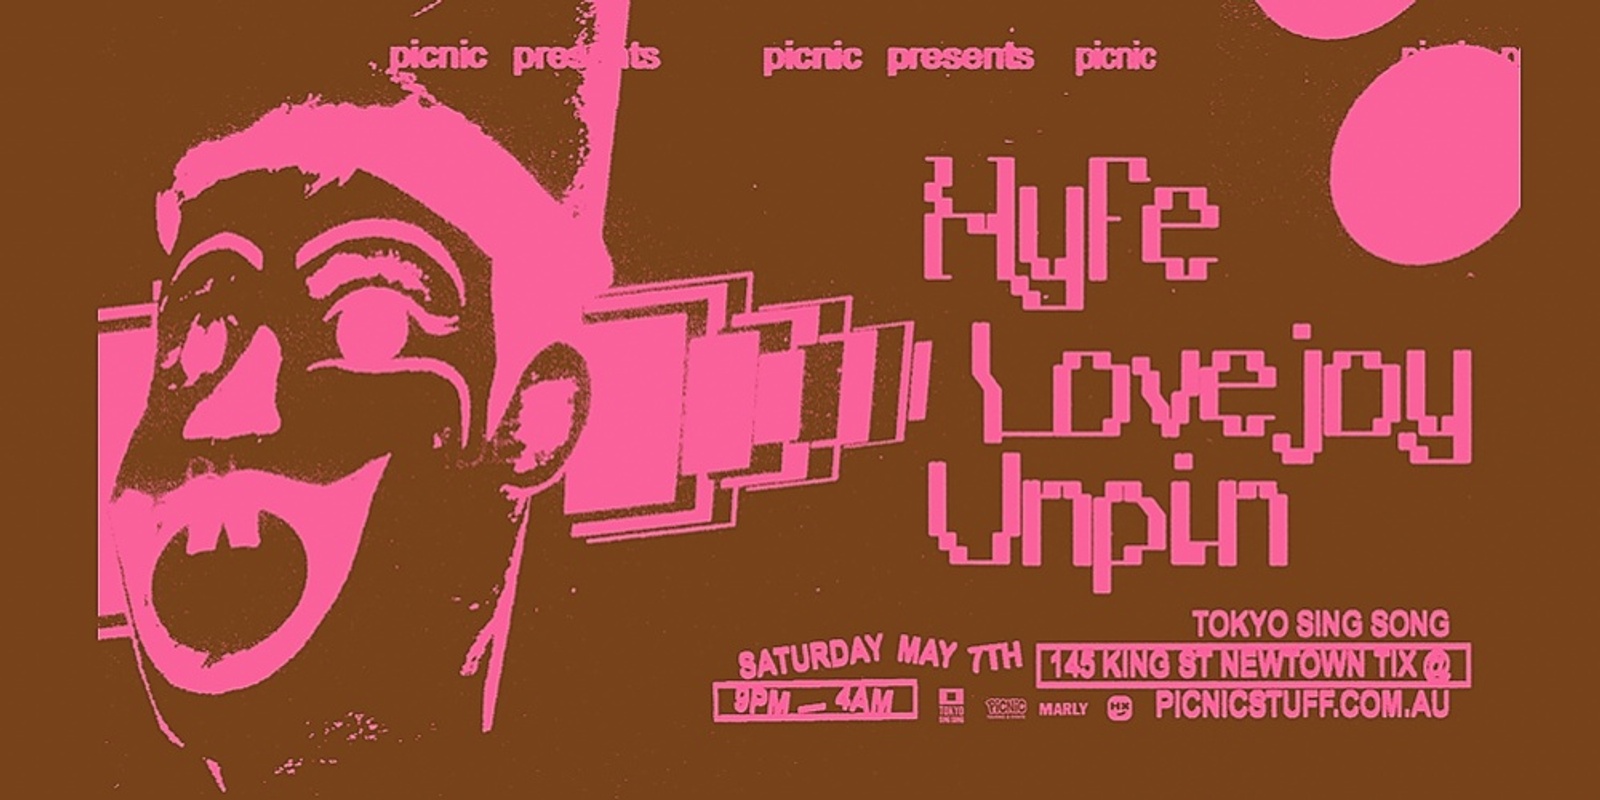 Banner image for Picnic presents Hyfe, Lovejoy + Unpin 